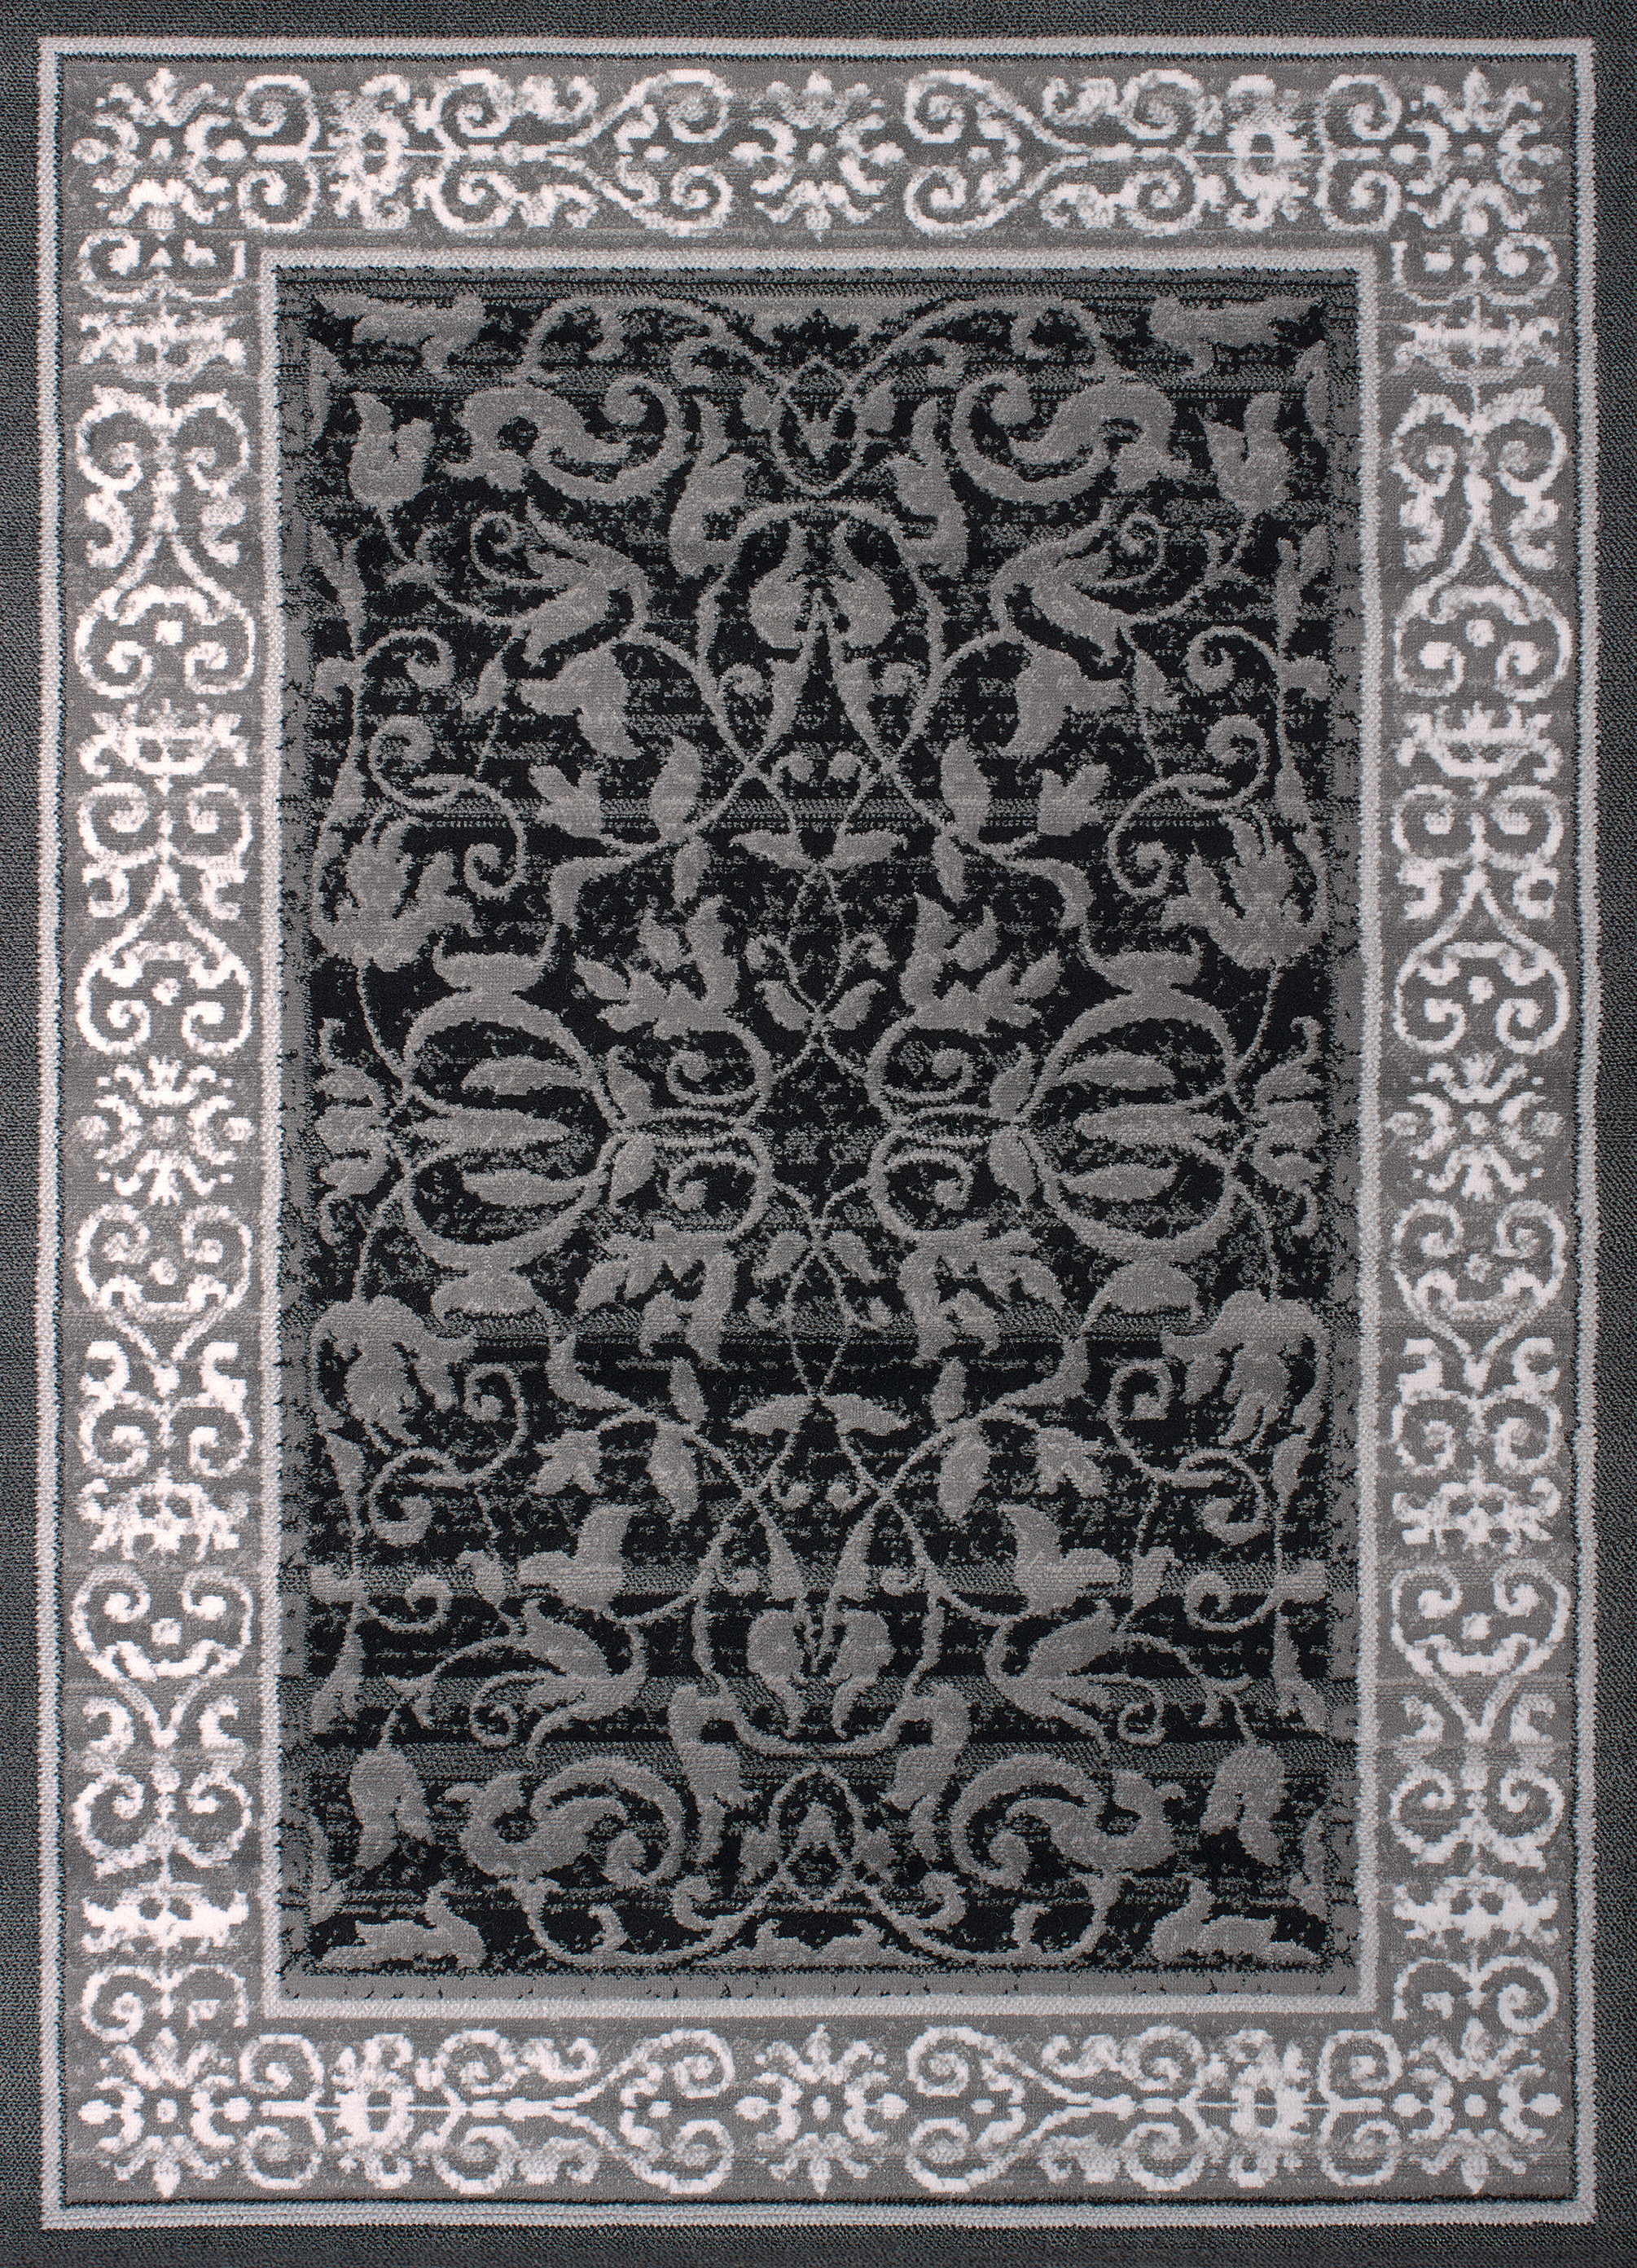 United Weavers Plaza Genevieve Runner Rug, Bordered Pattern, Grey, 2'3 X 7'2" - image 4 of 6